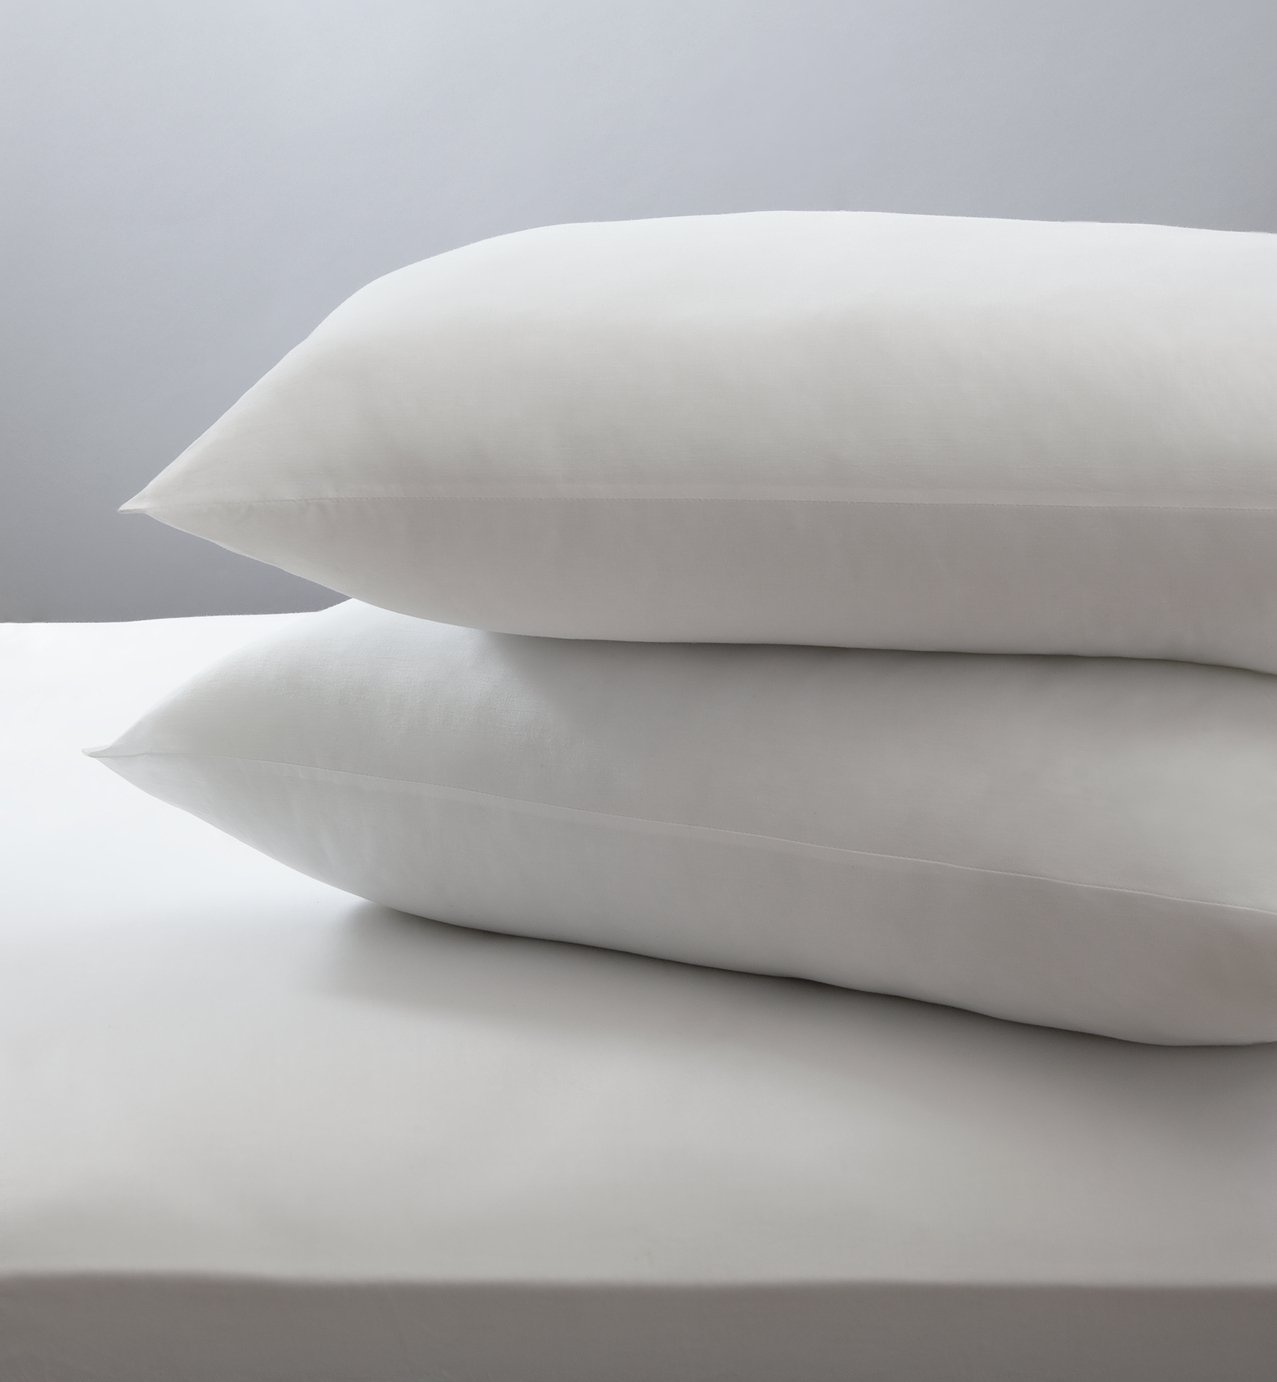 argos pillows neck support